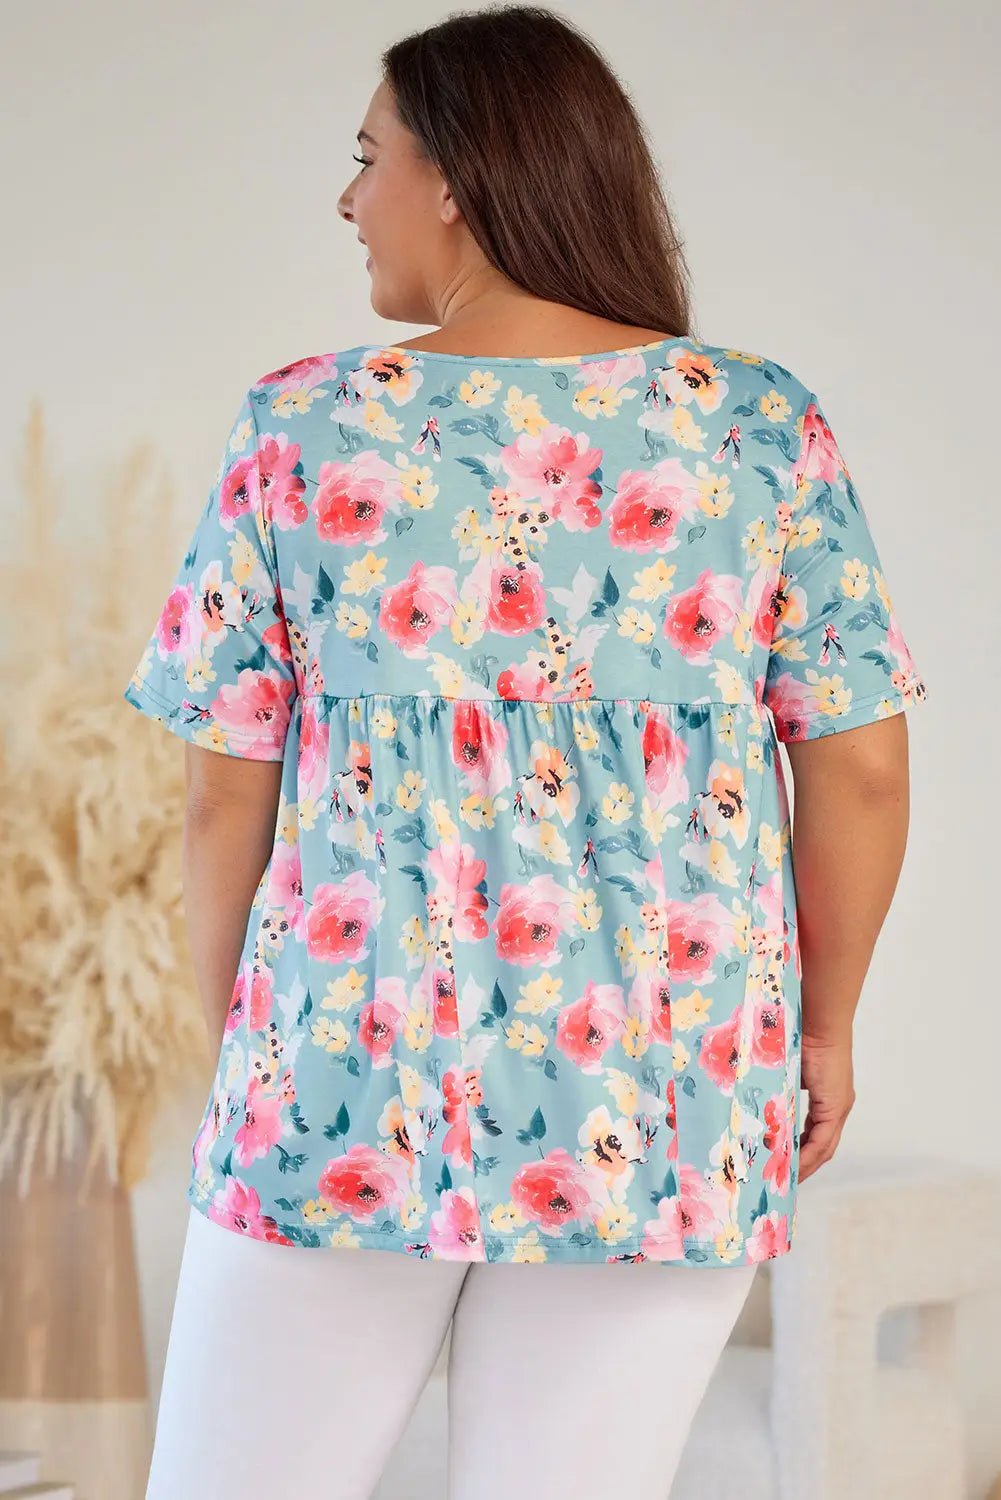 Sky blue boho print sleeveless high waist long floral dress - dresses